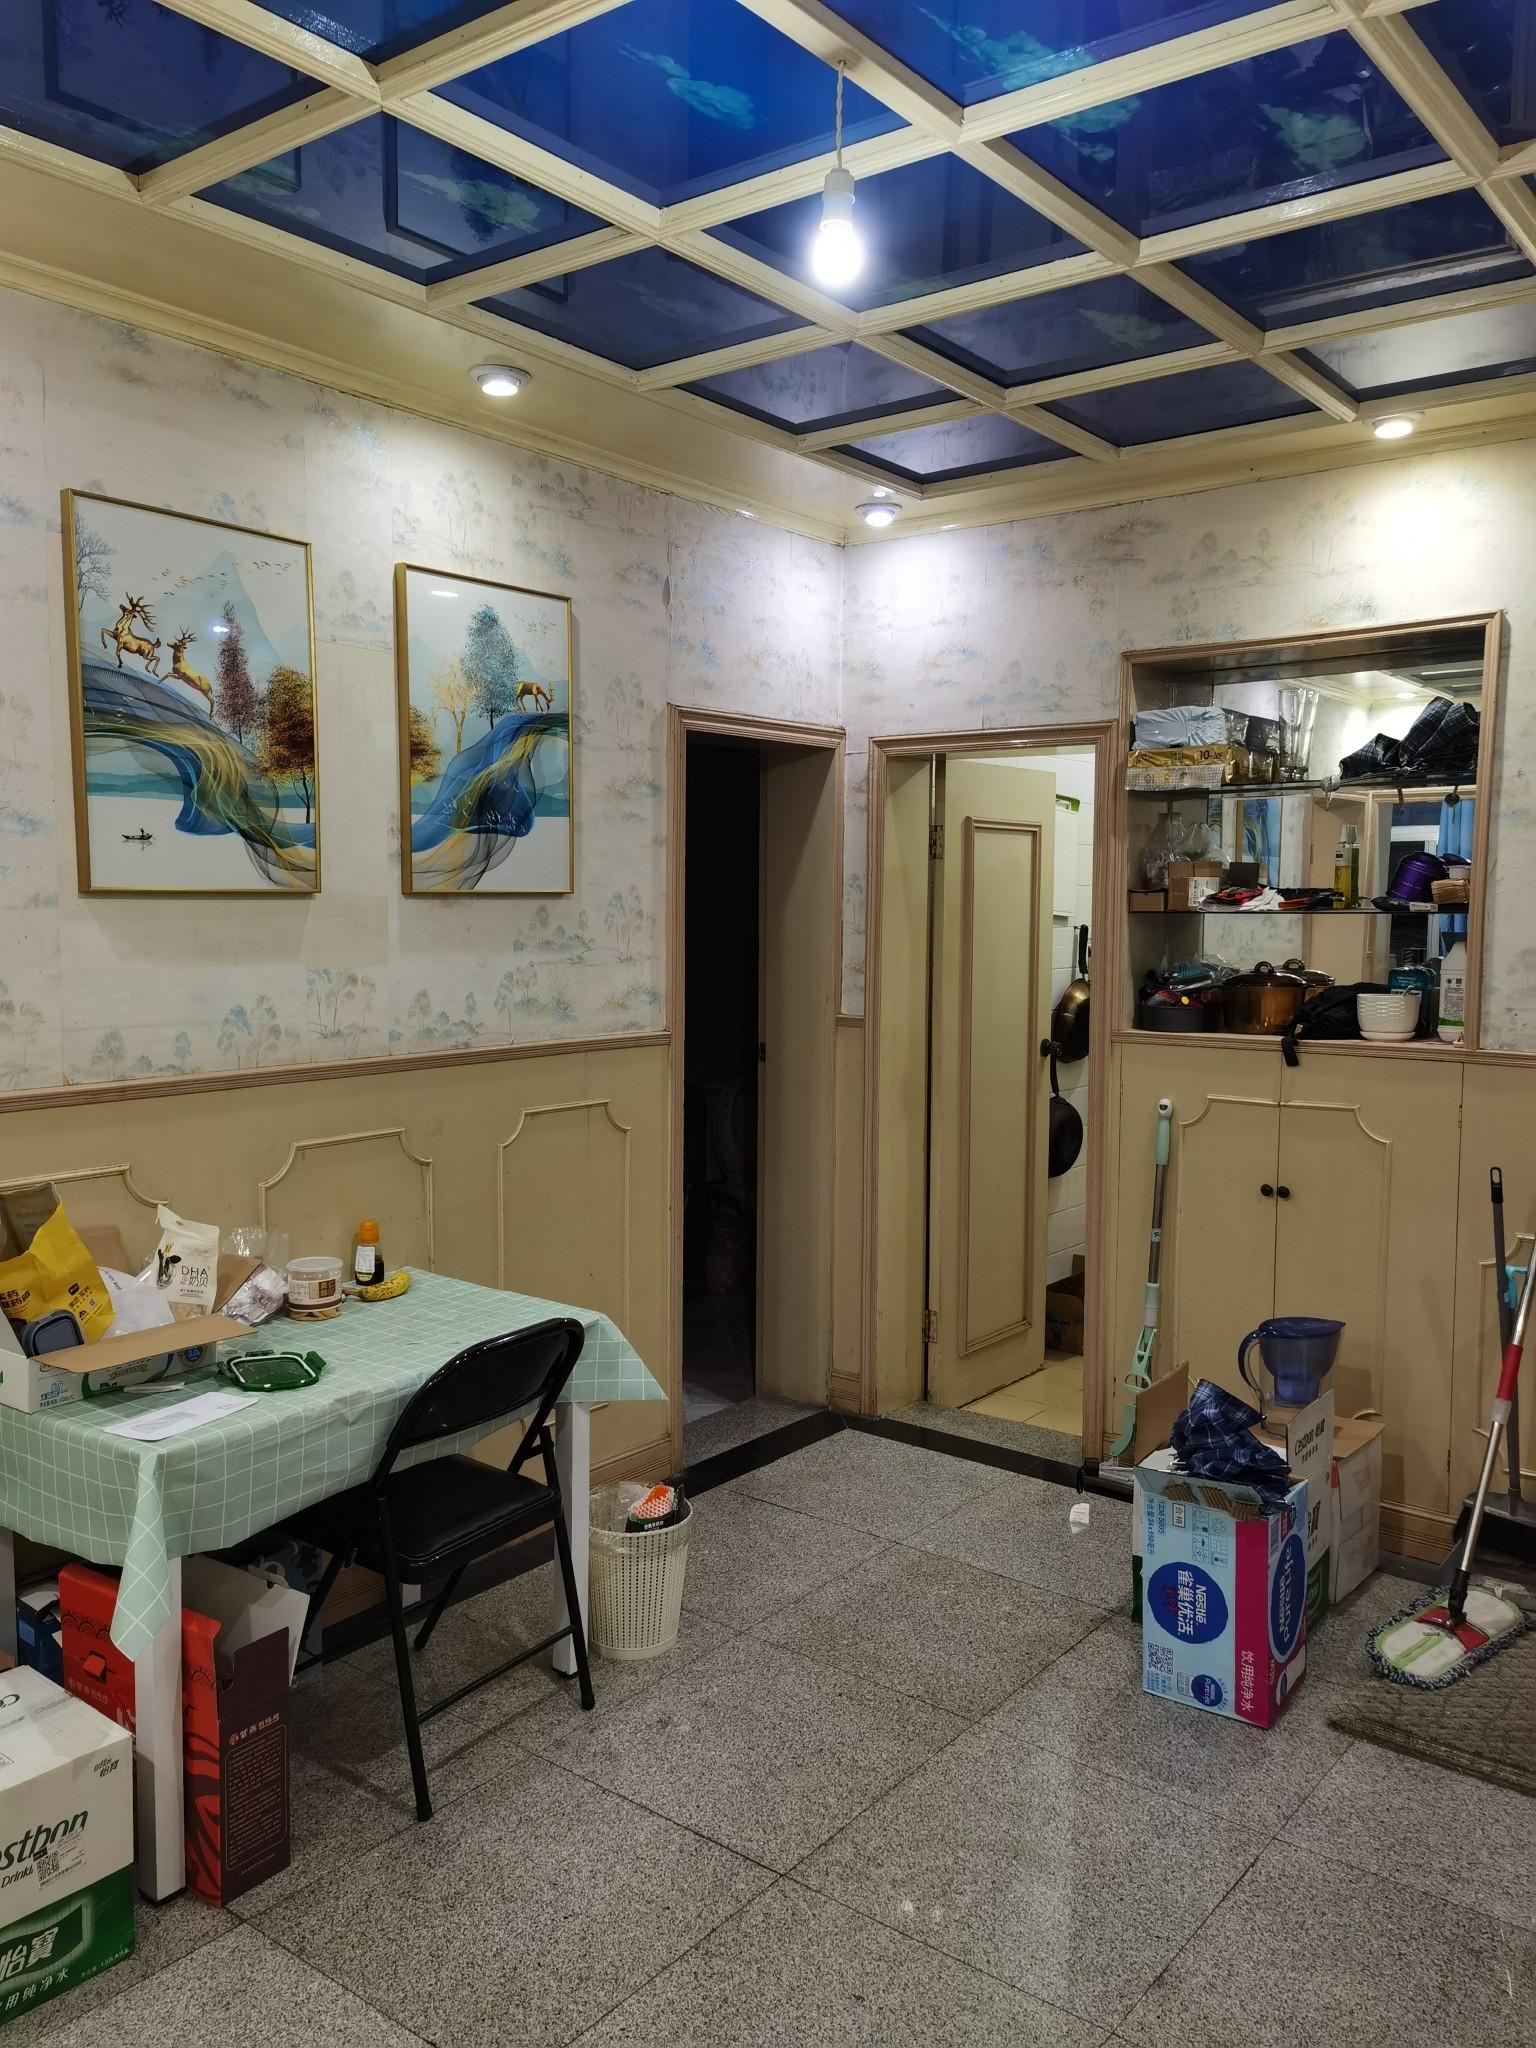 Shanghai-Jing‘An-Cozy Home,Clean&Comfy,No Gender Limit,Hustle & Bustle,“Friends”,Chilled,LGBTQ Friendly,Pet Friendly